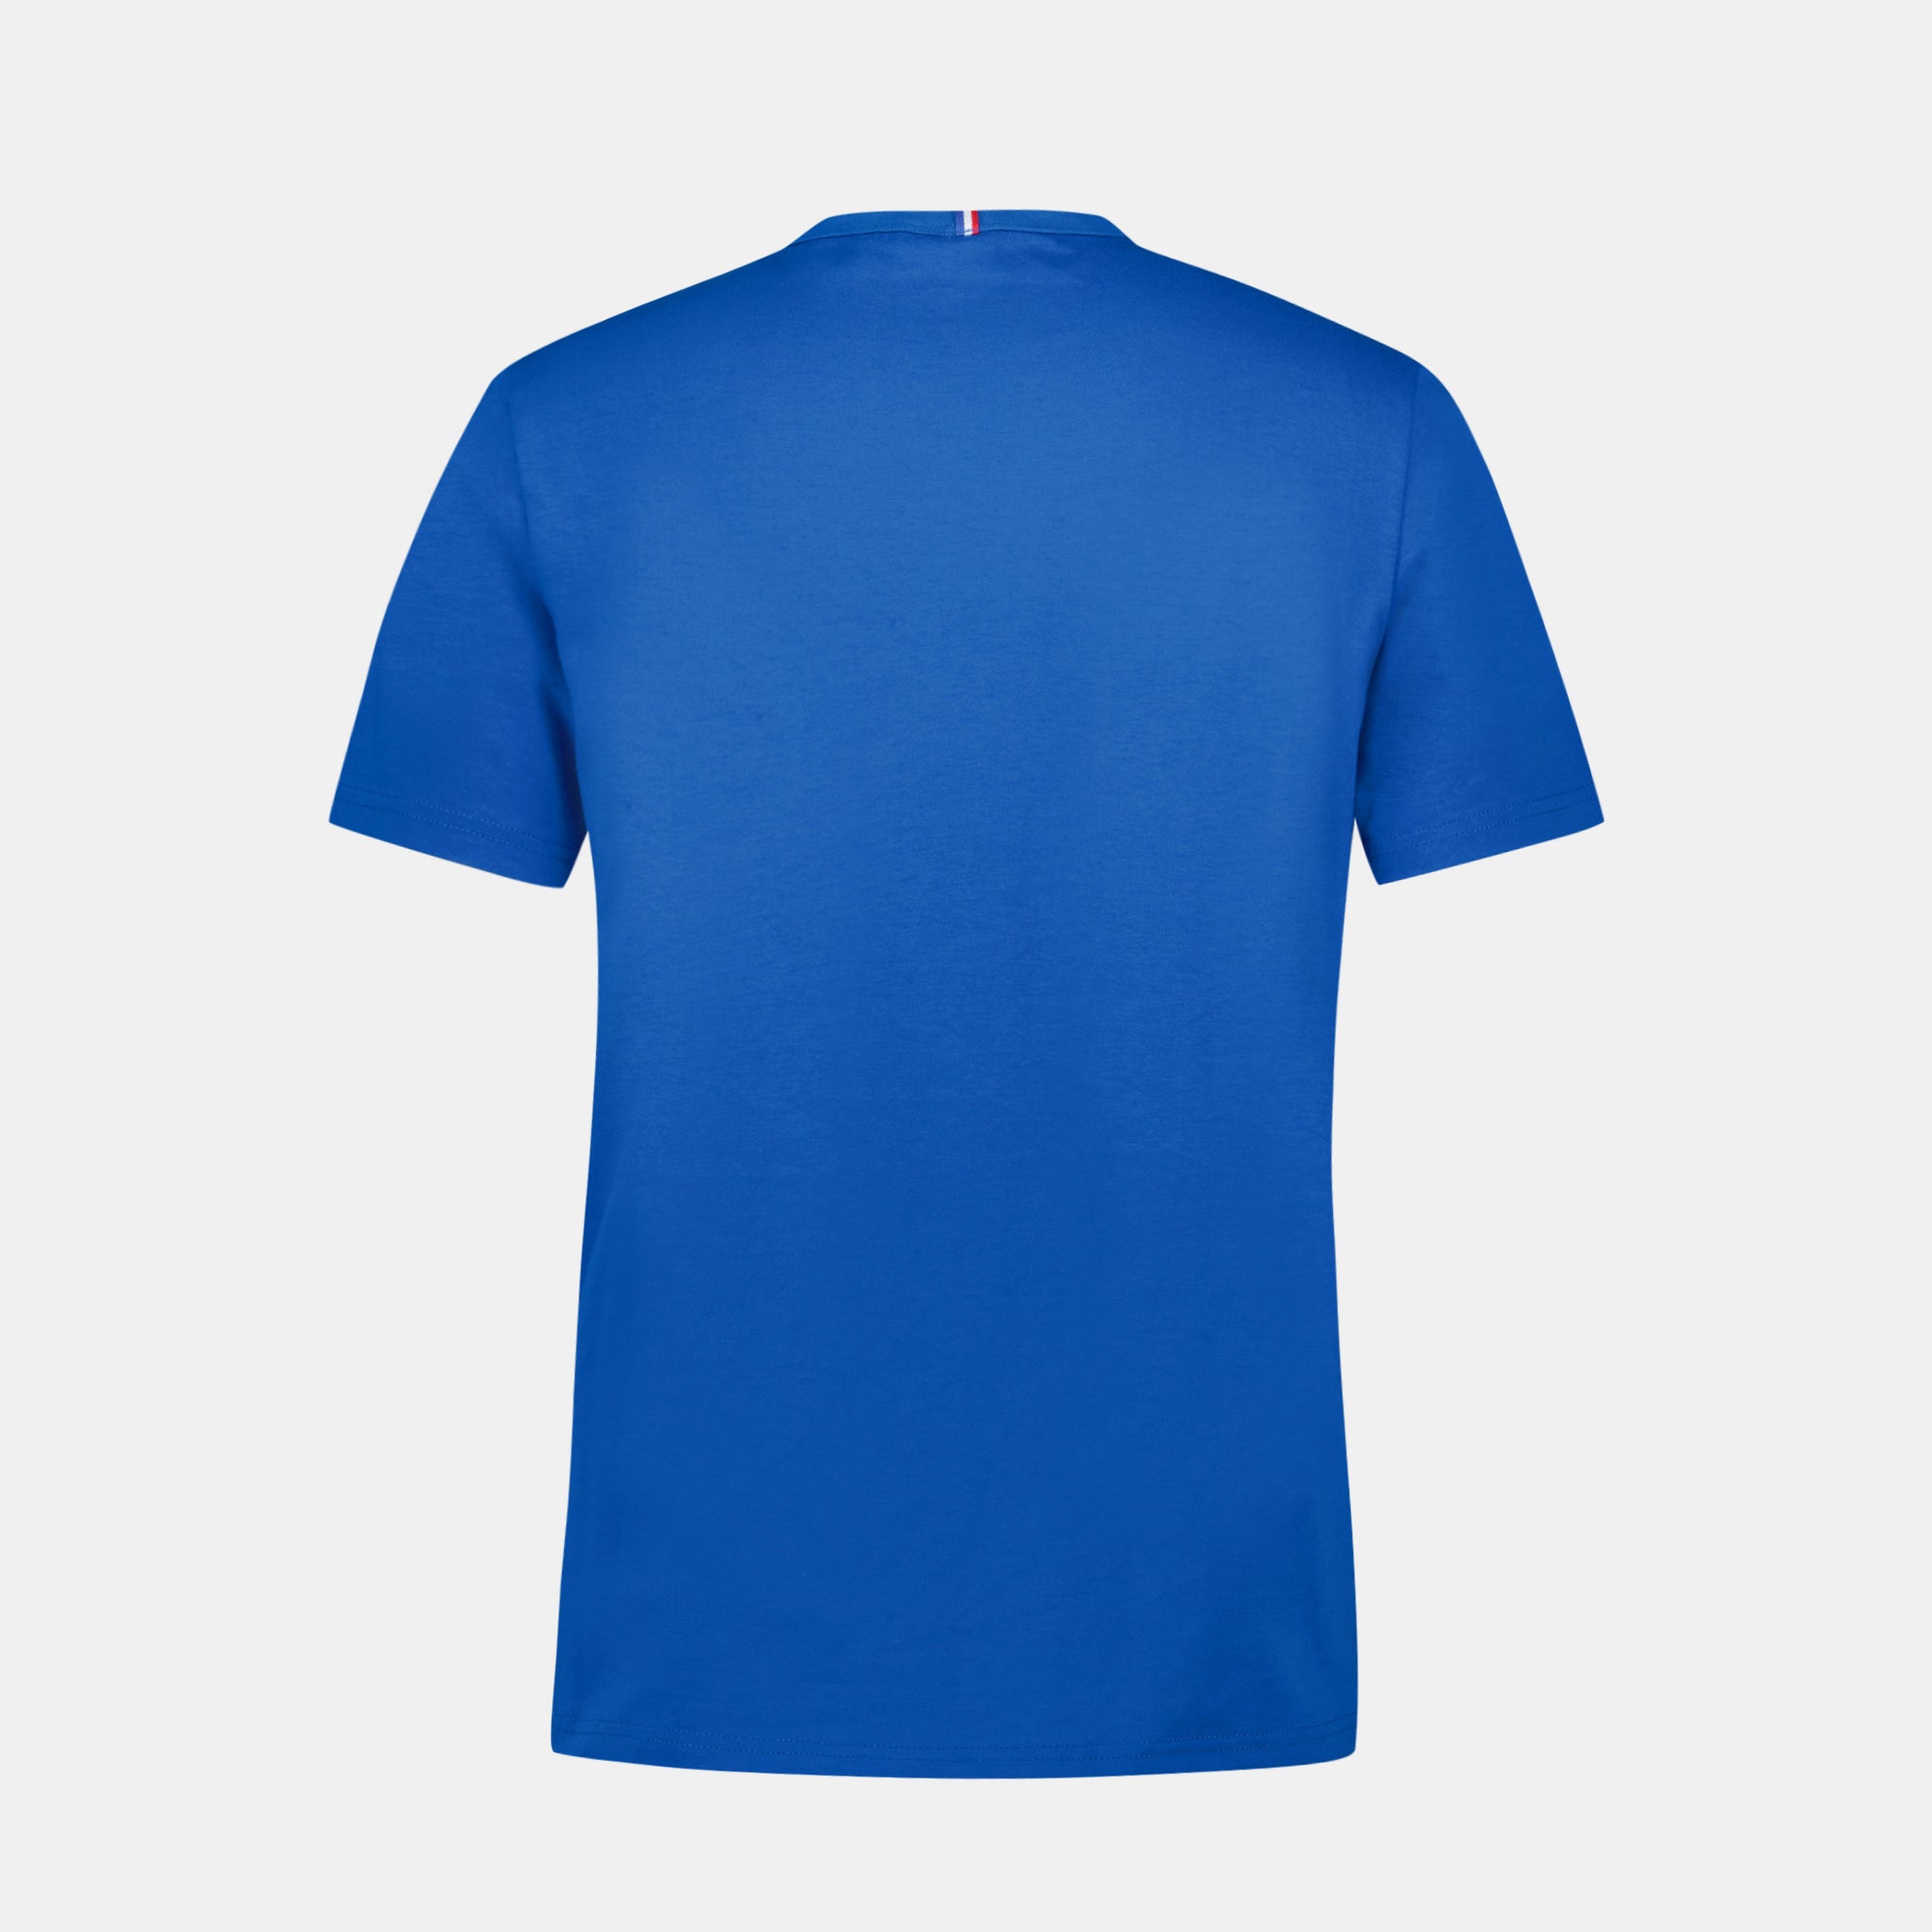 2410213-SAISON 1 Tee SS N°2 M lapis blue  | Camiseta Hombre